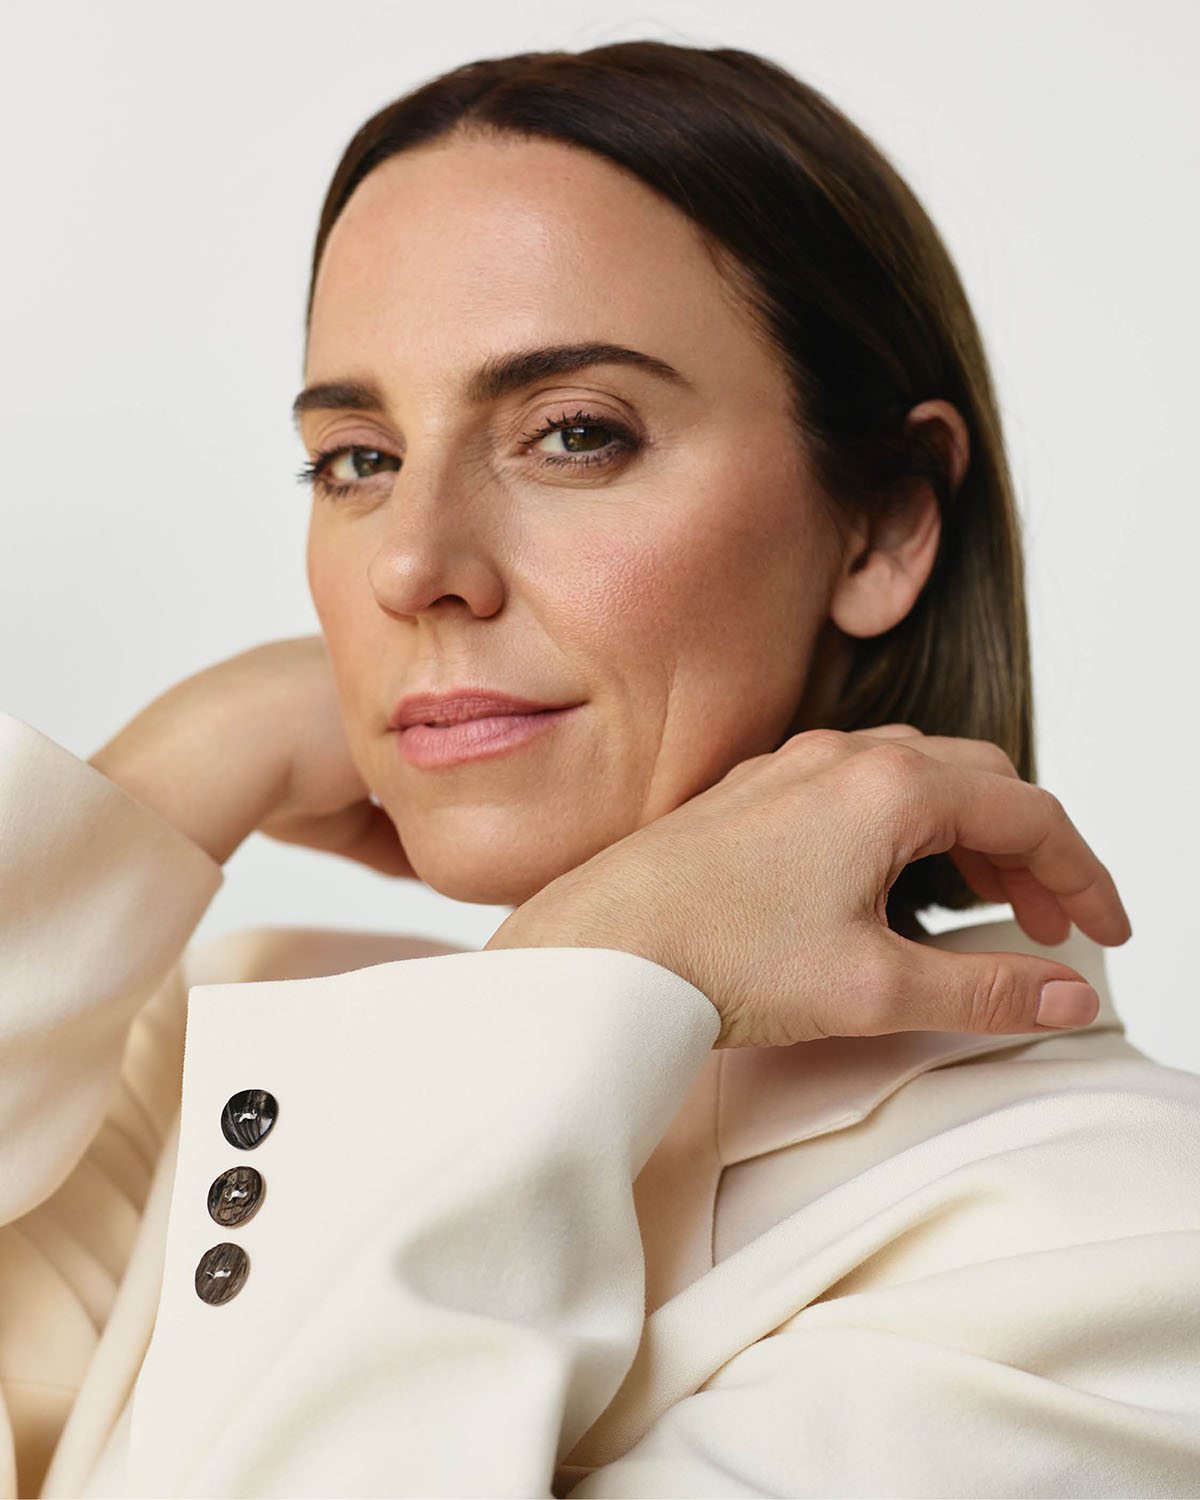 Melanie C by Anya Holdstock for Vogue Spain February 2021